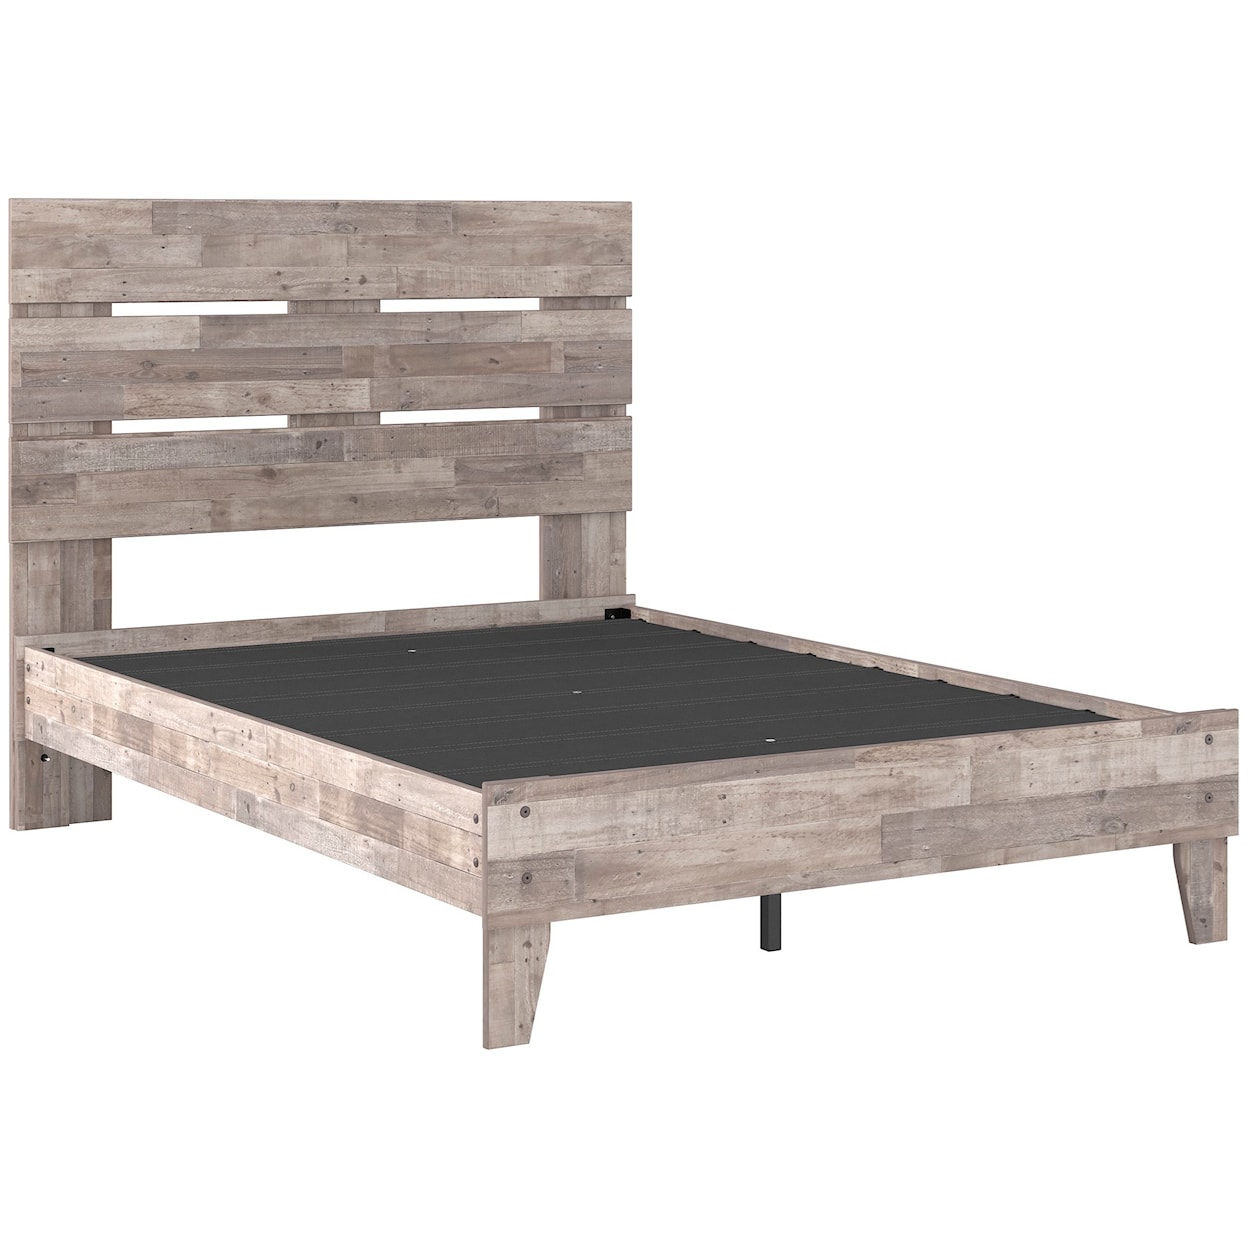 Ashley Furniture Signature Design Neilsville Full Platform Bed with Headboard